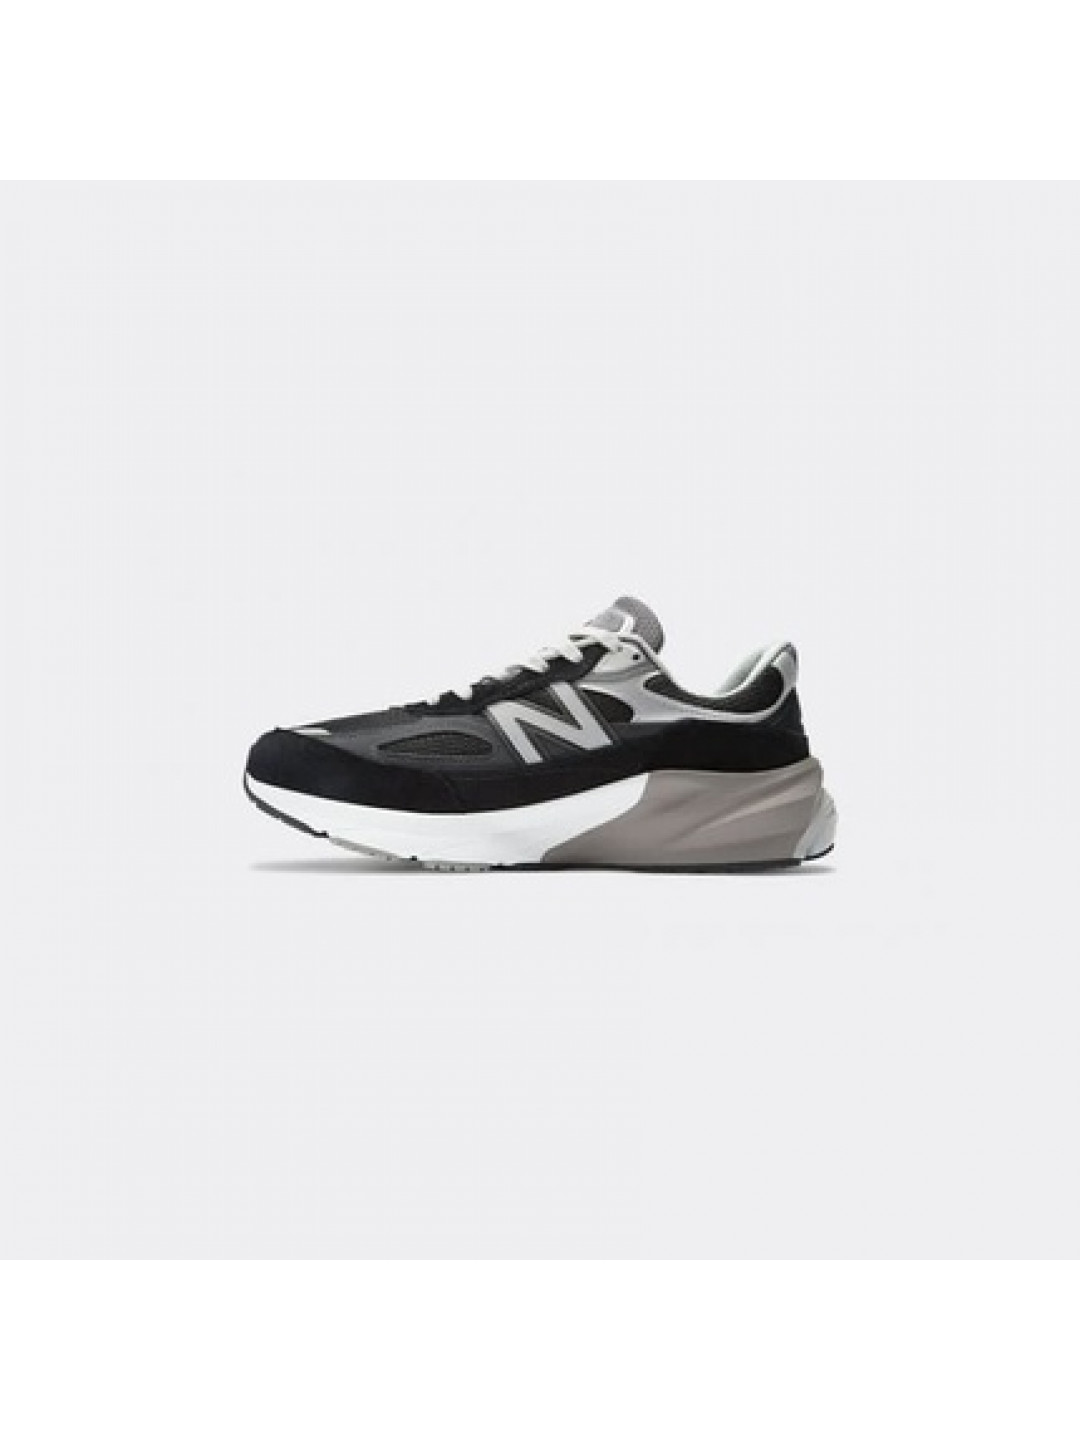 New Balance 990 V6 'Grey/Black' Men Sneakers